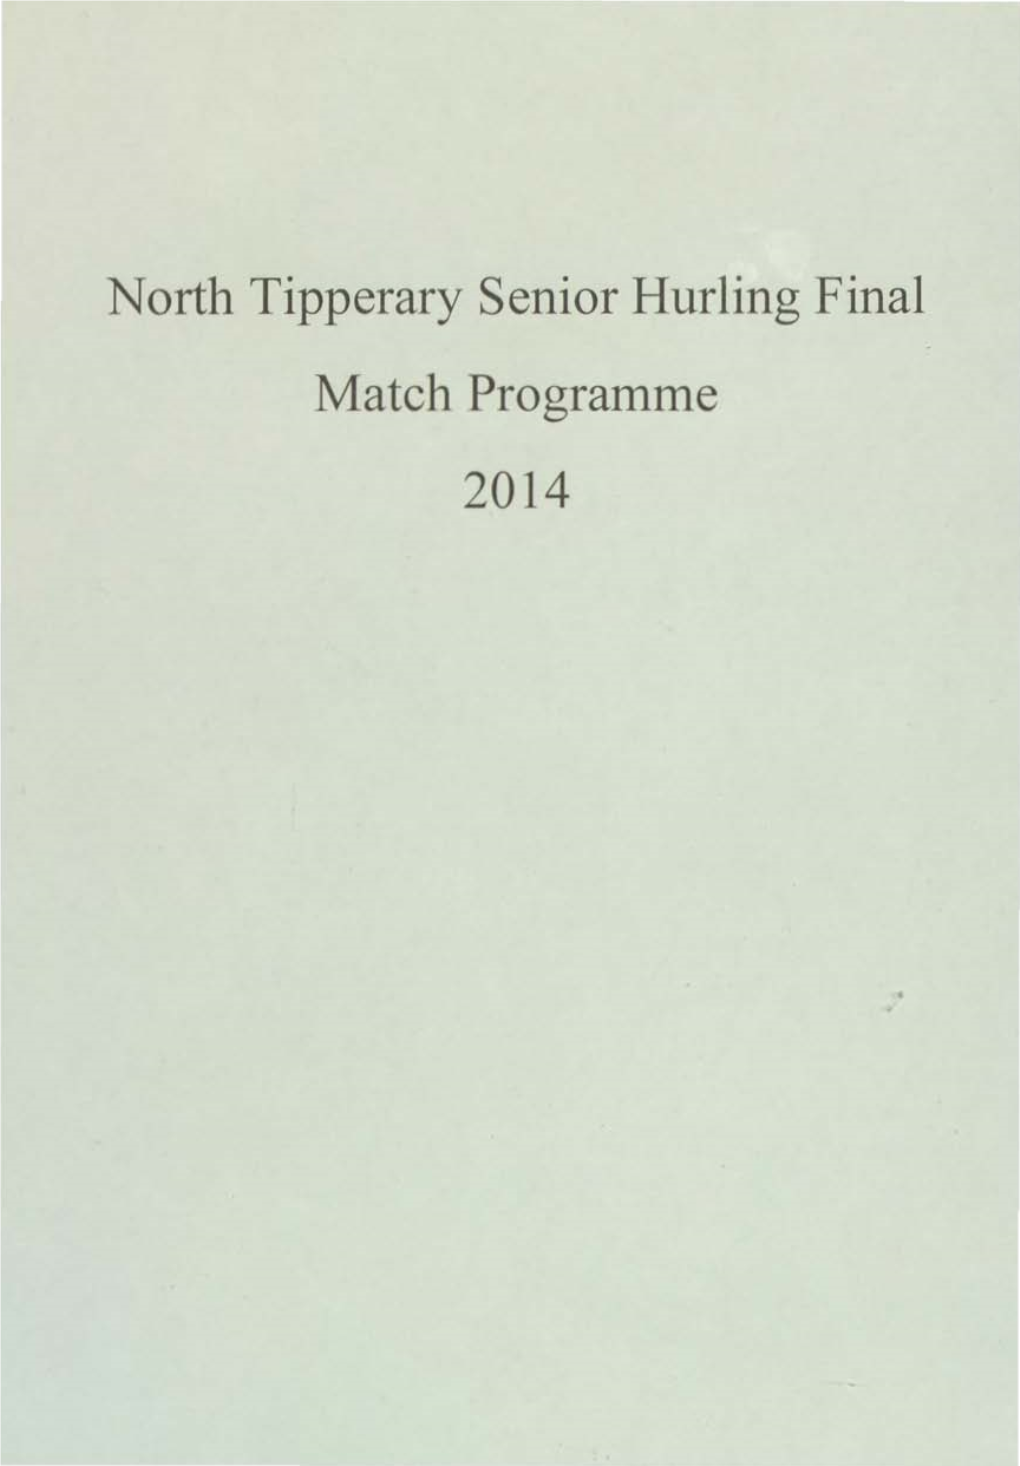 North Tipperary Senior Hurling Final Match Programme 2014